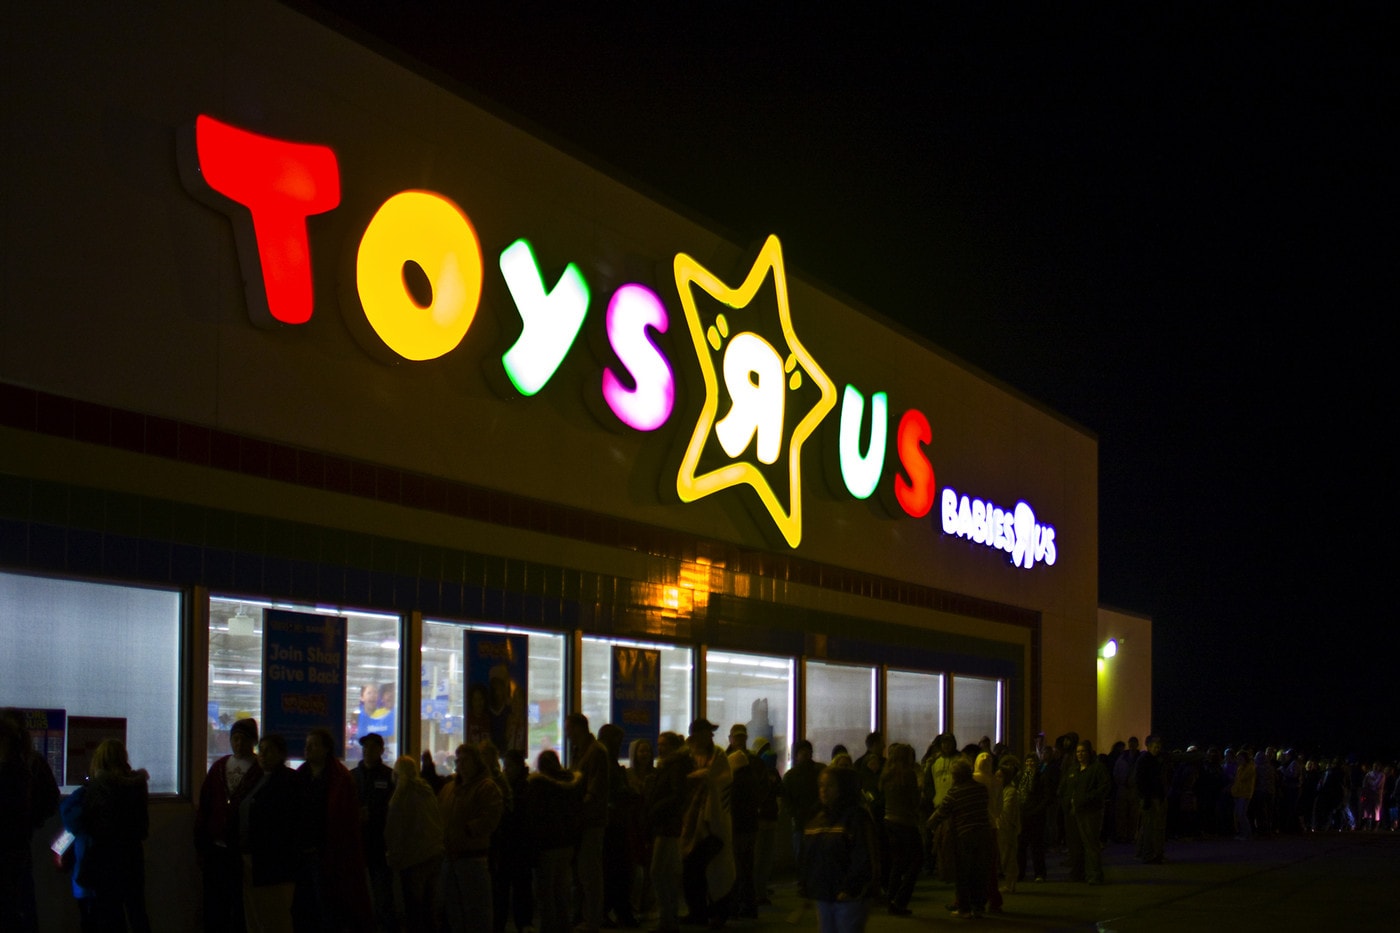 Toys R Us Target store New Website Design october 2019 news info details relaunch